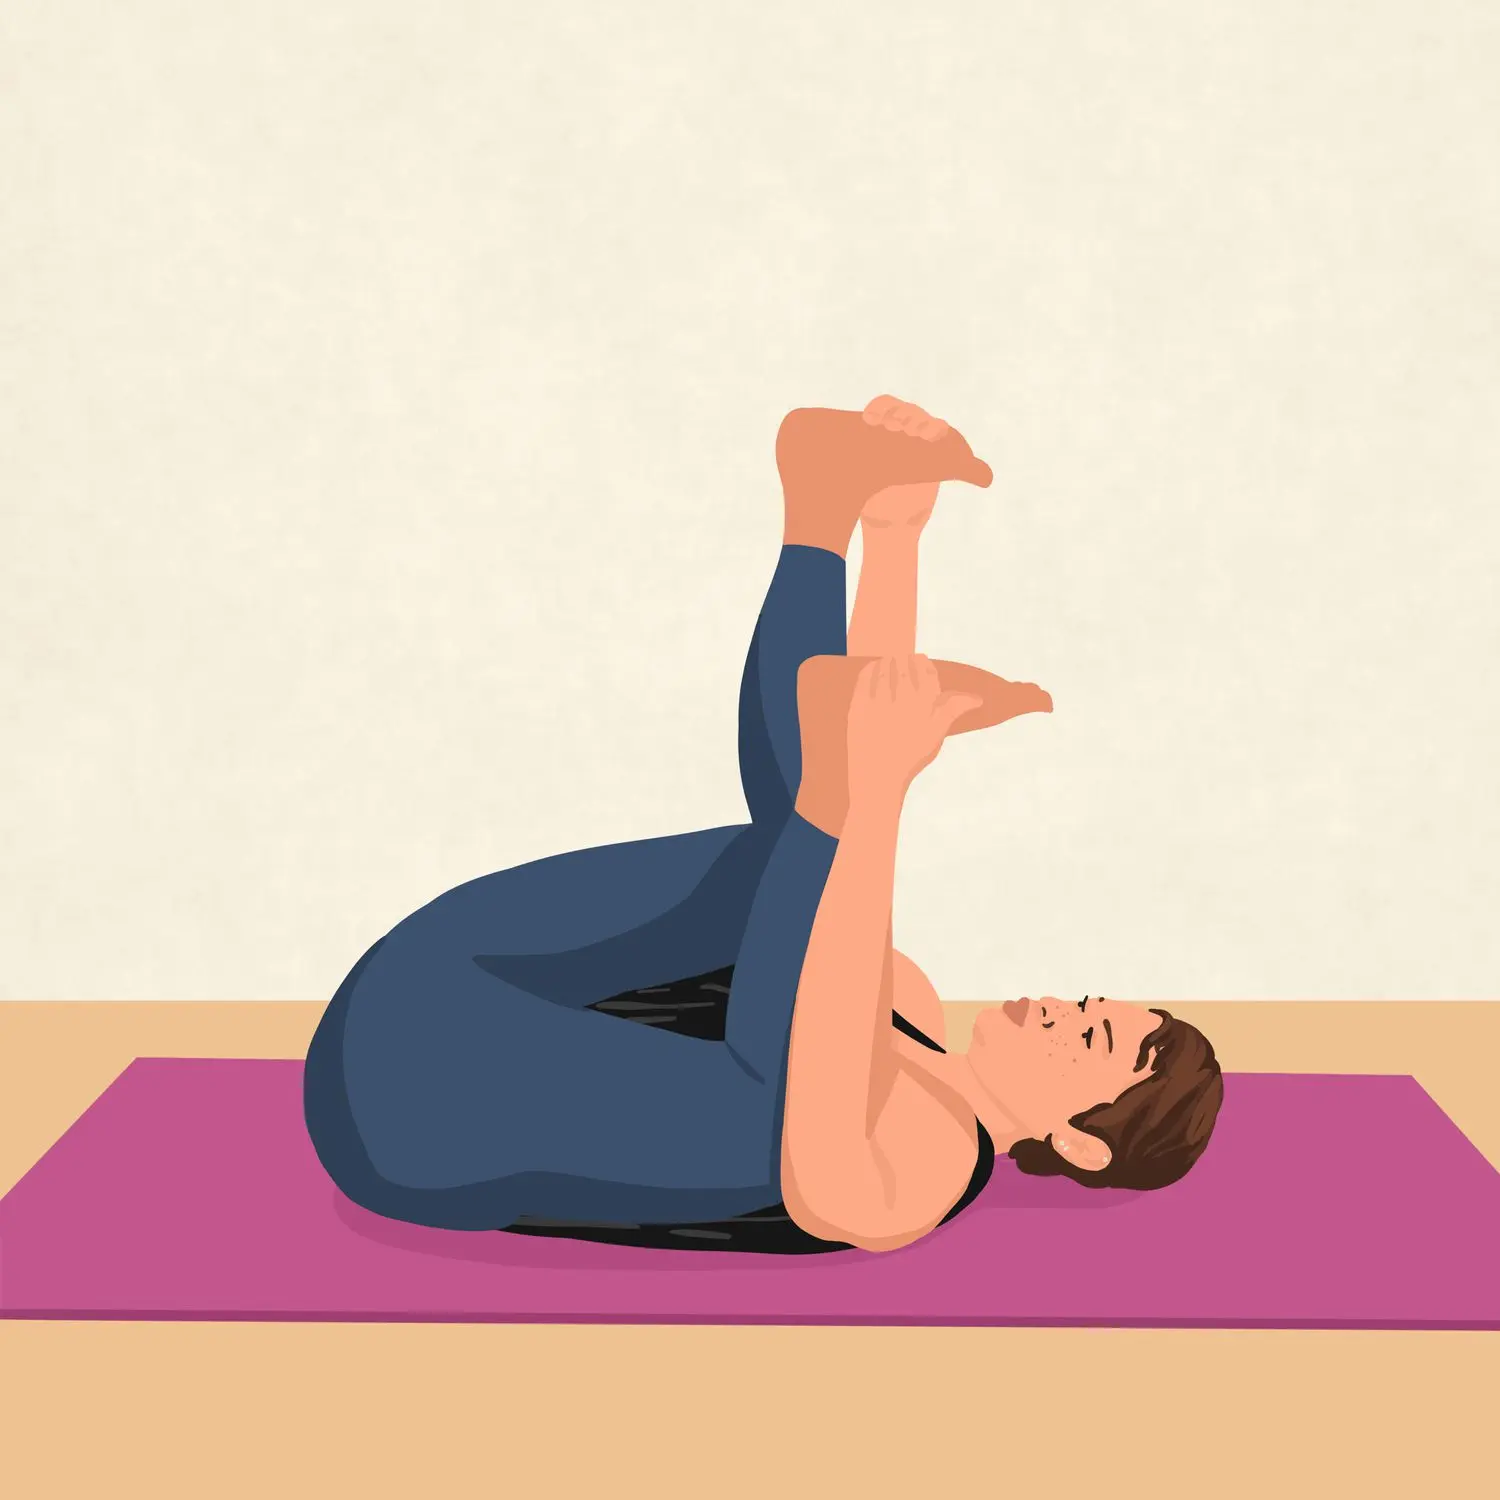 pelvic floor yoga poses - Is bridge pose good for pelvic floor